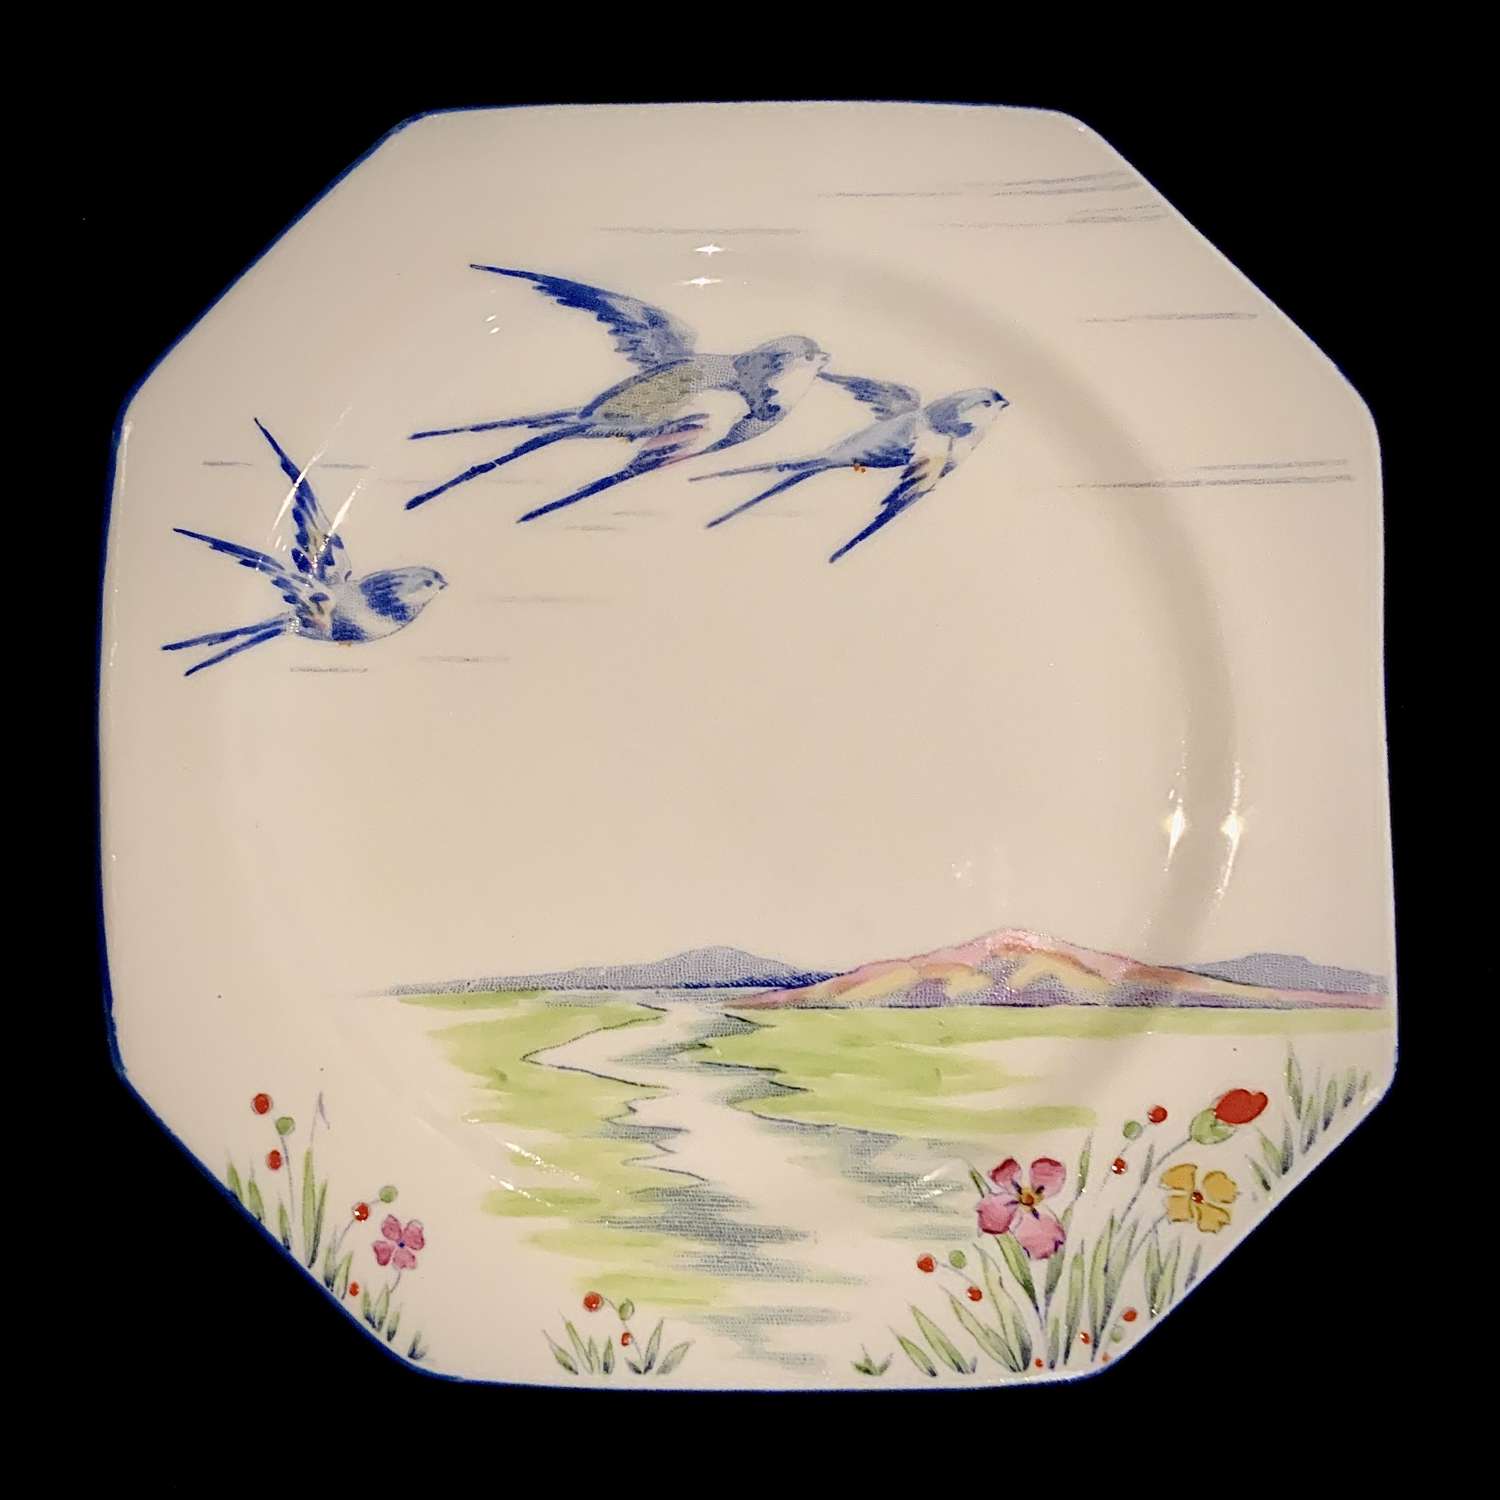 Sir Malcolm Campbell “Blue Bird” Art Deco Commemorative Plate